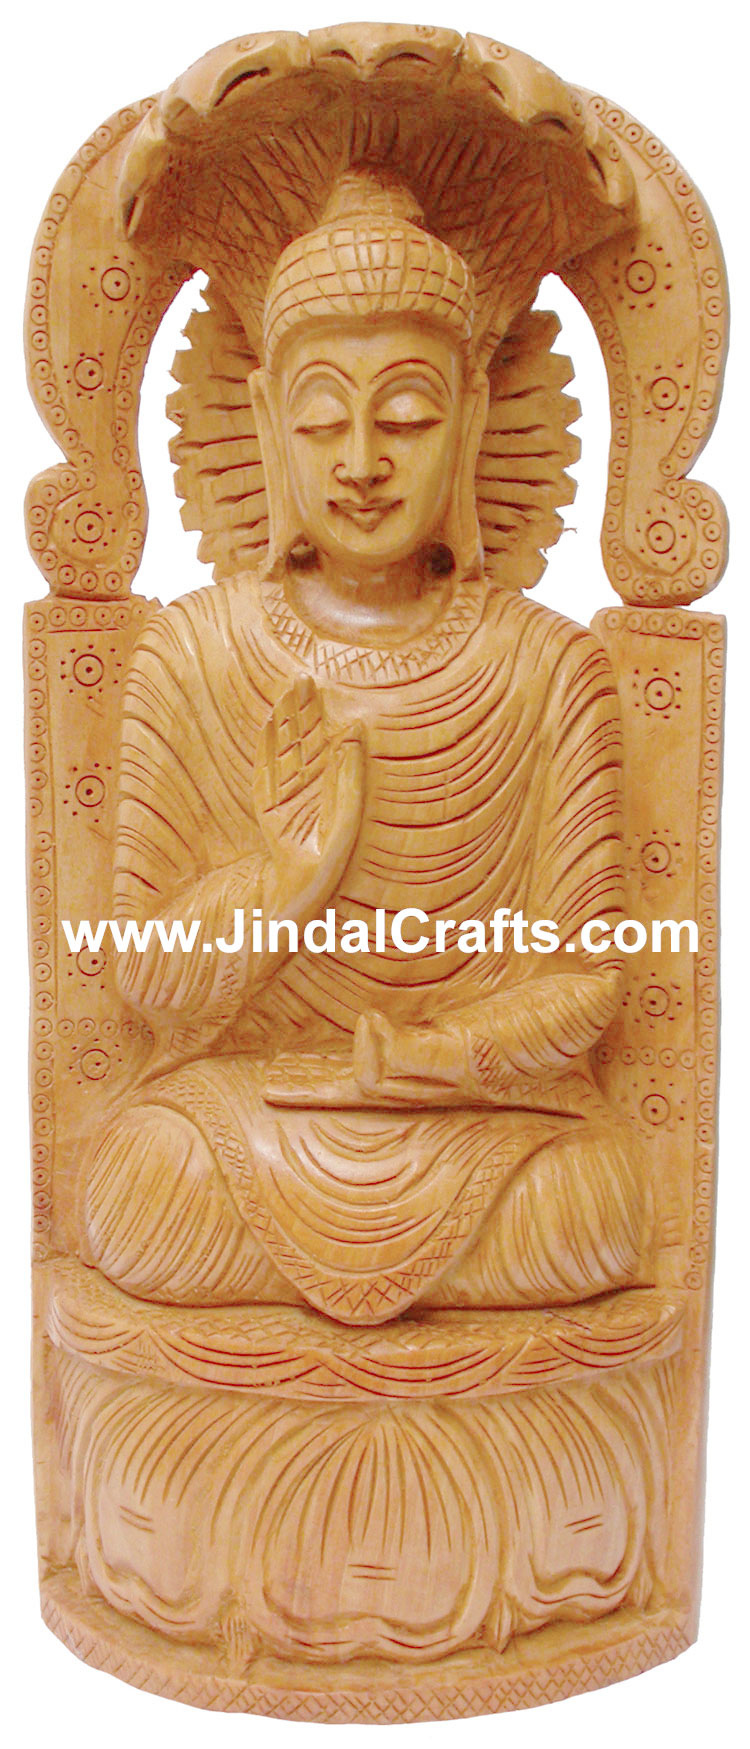 Wood Sculpture Meditating Buddha under Shadow of Snakes Handicrafts Idol Crafts